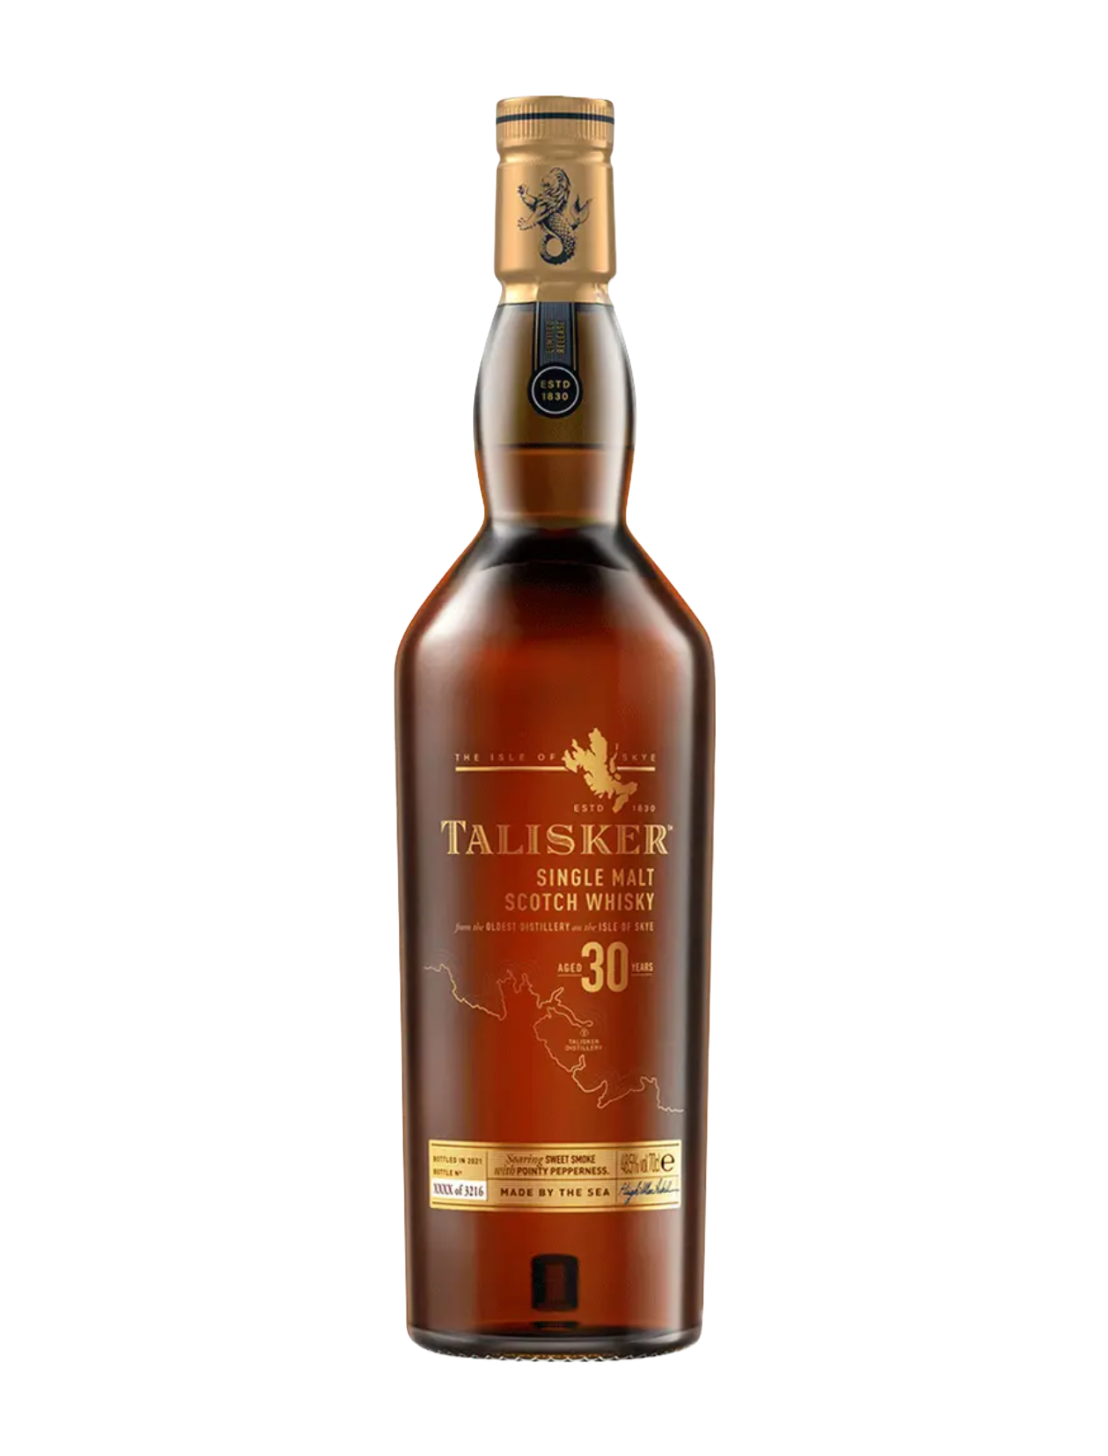 An elegant bottle of Talisker 30 Year Old Single Malt Scotch in front of a plain white background